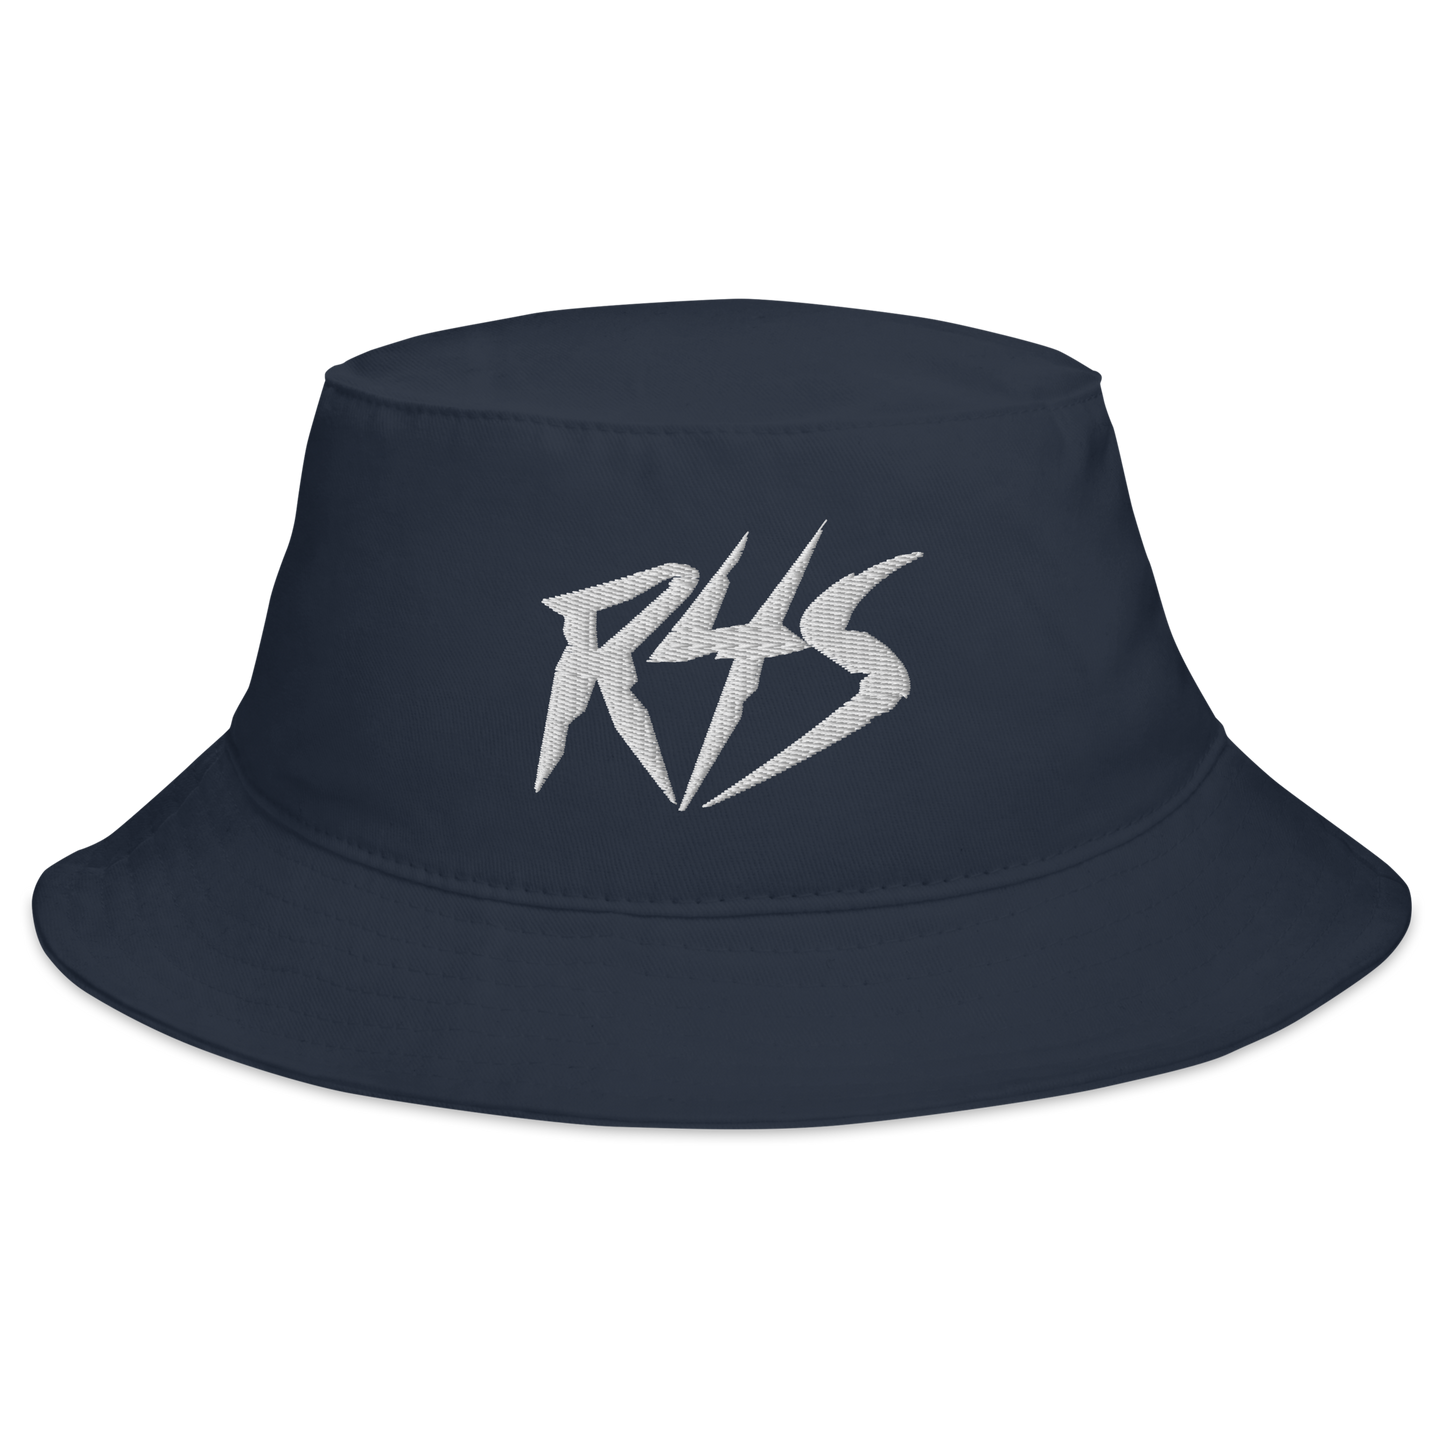 The R4S Bucket Hat